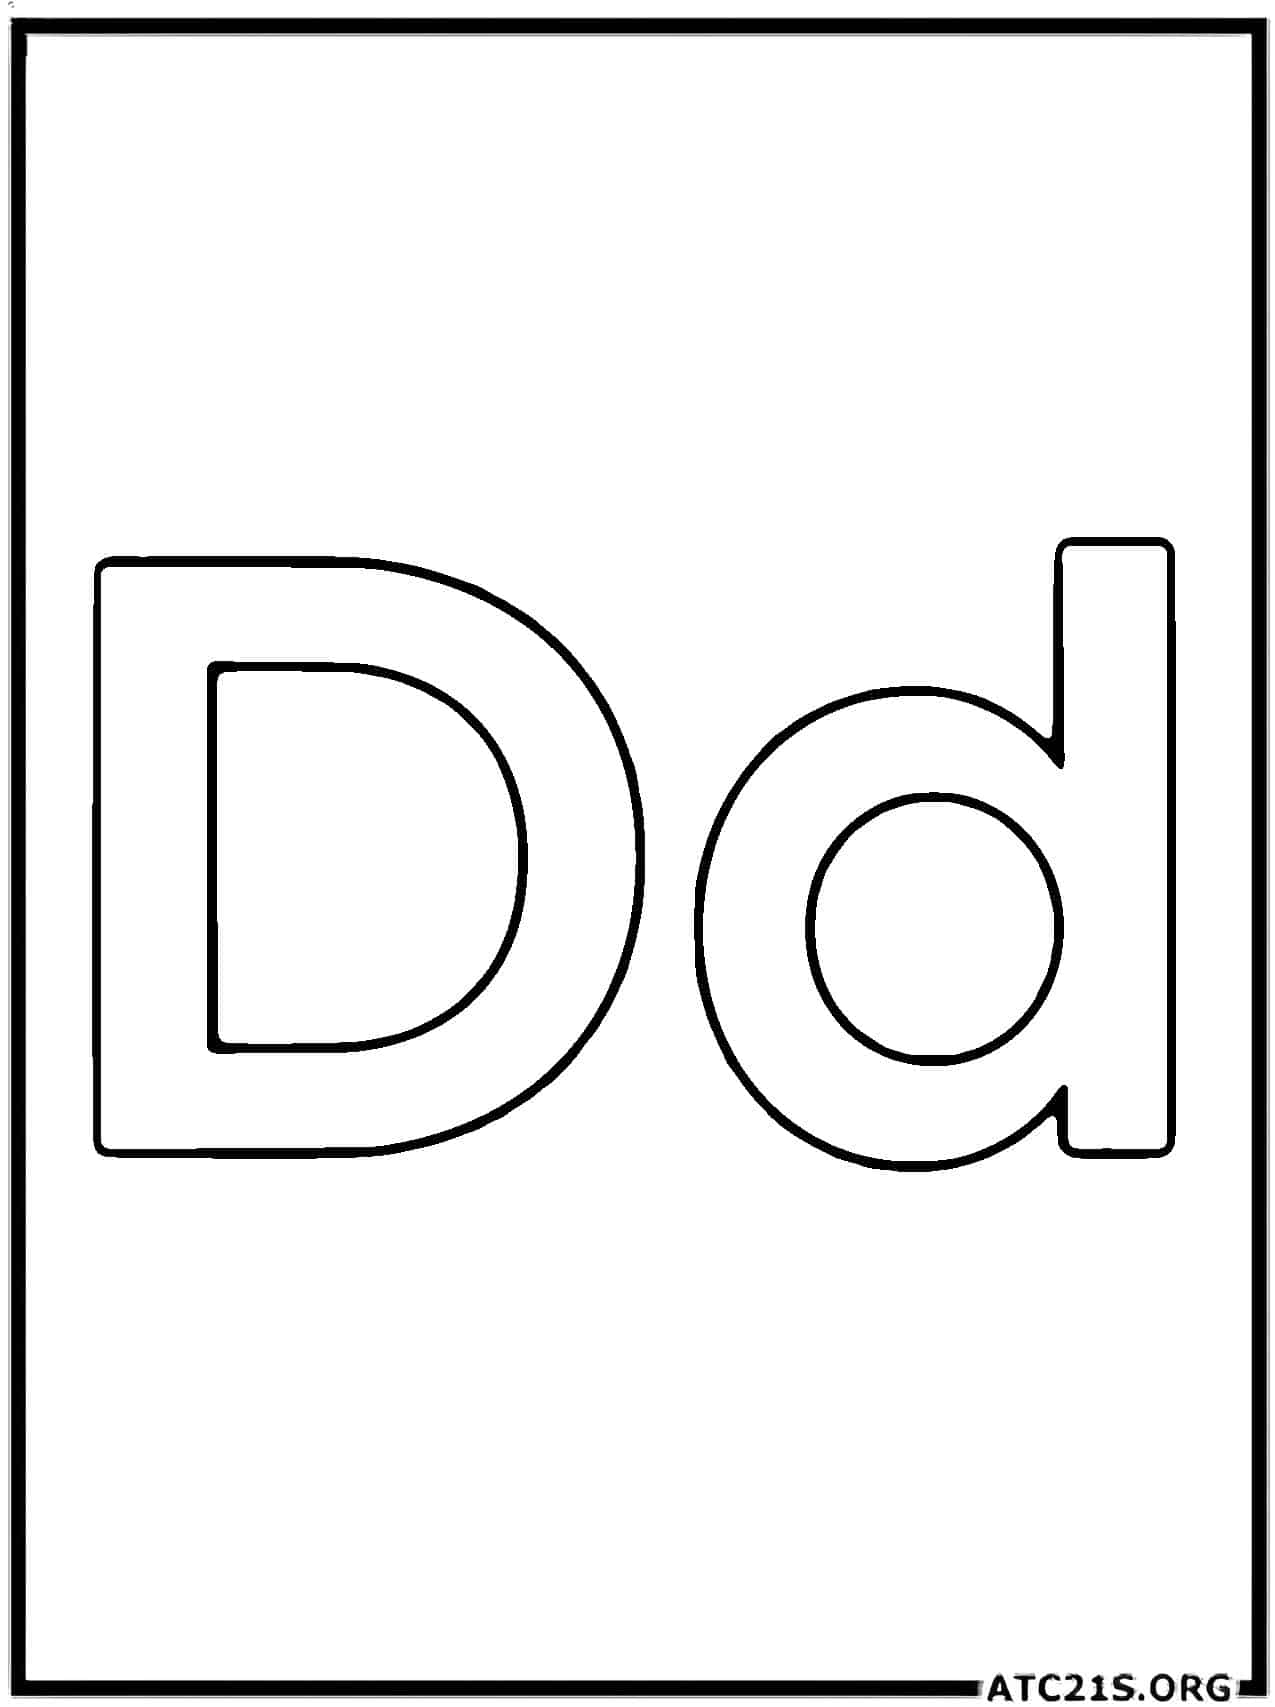 letter_d_coloring_page